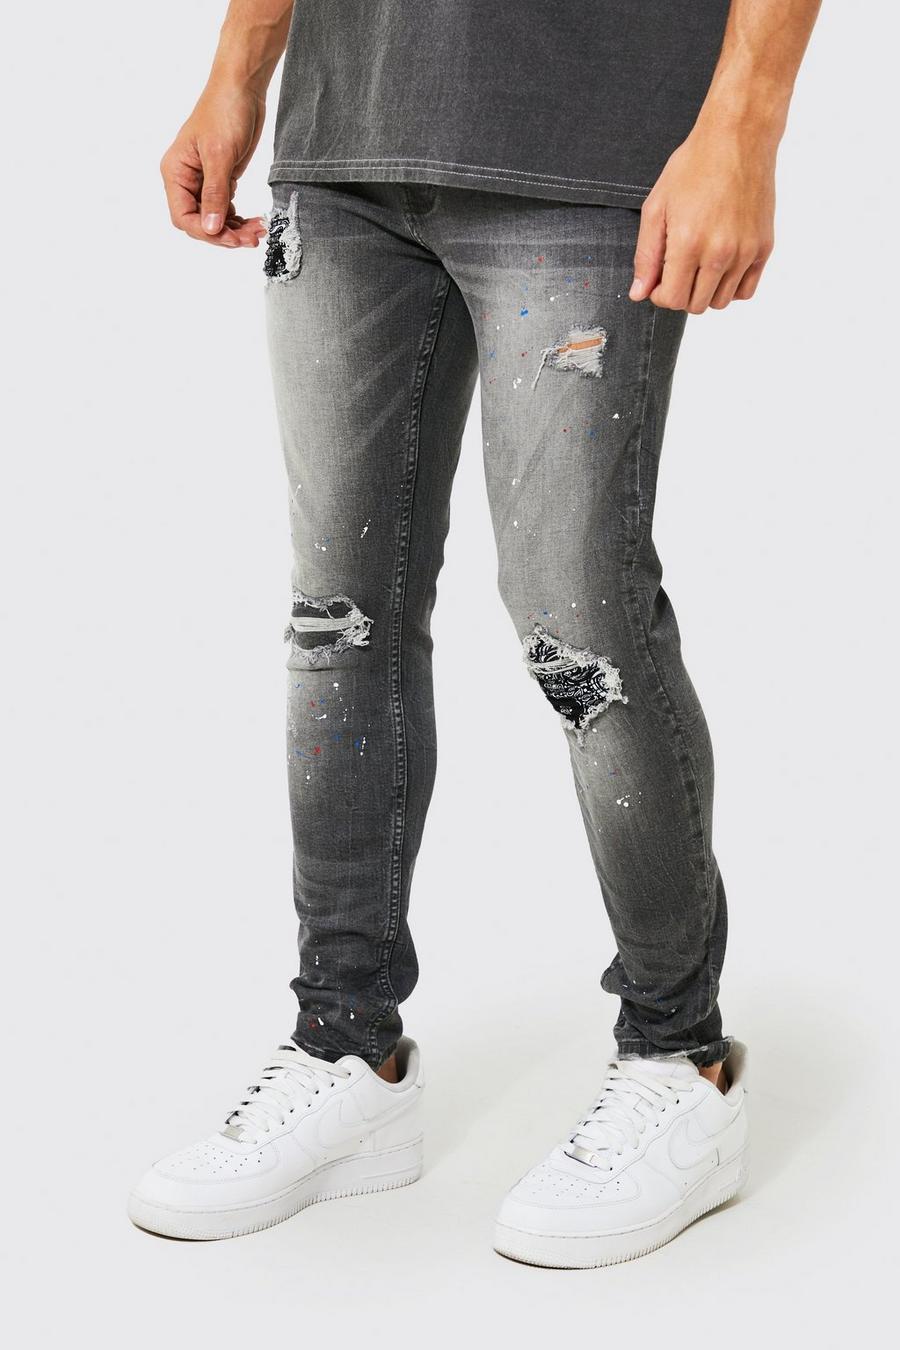 Jeans Stretch Skinny Fit in fantasia a bandana con strappi & rattoppi, Mid grey gris